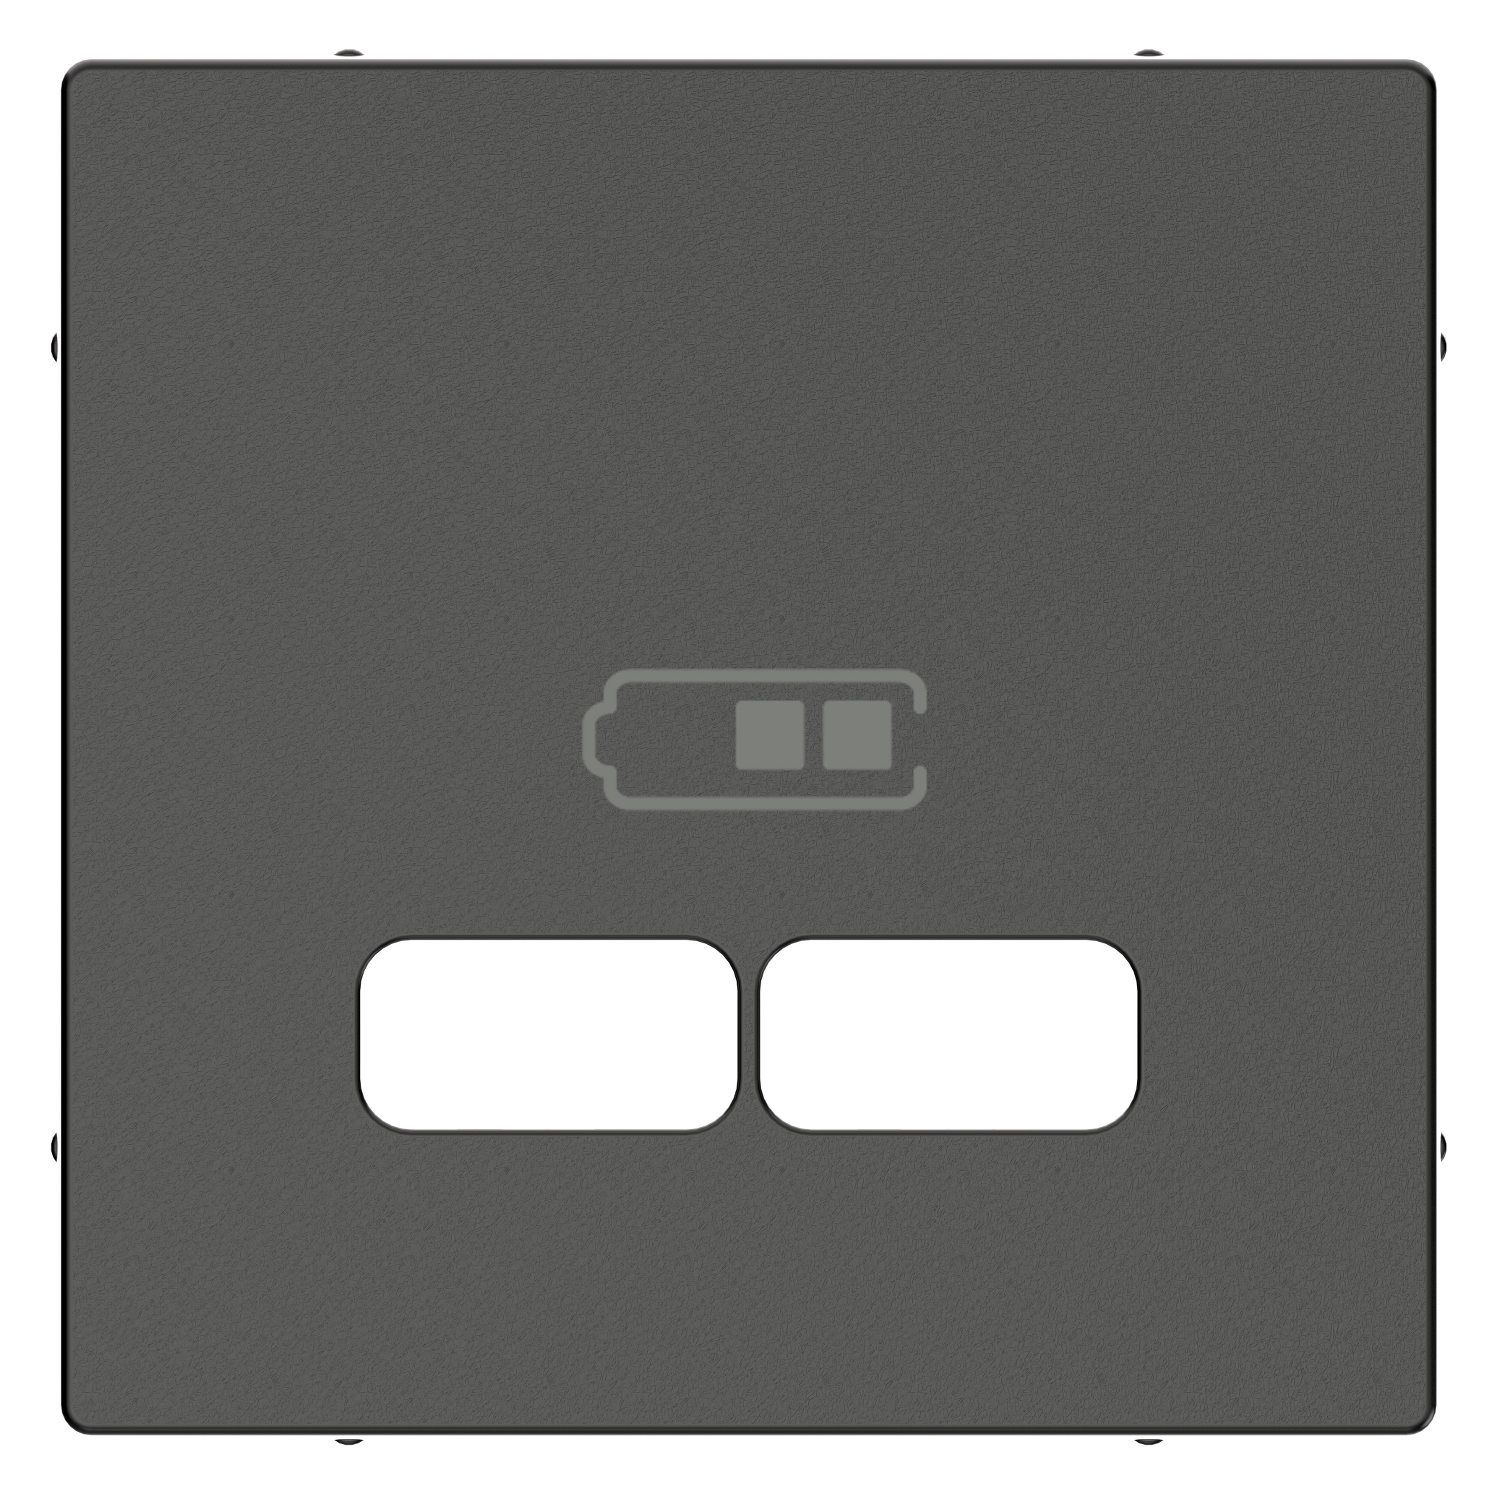 Лицьова панель заряджання USB антрацит System M